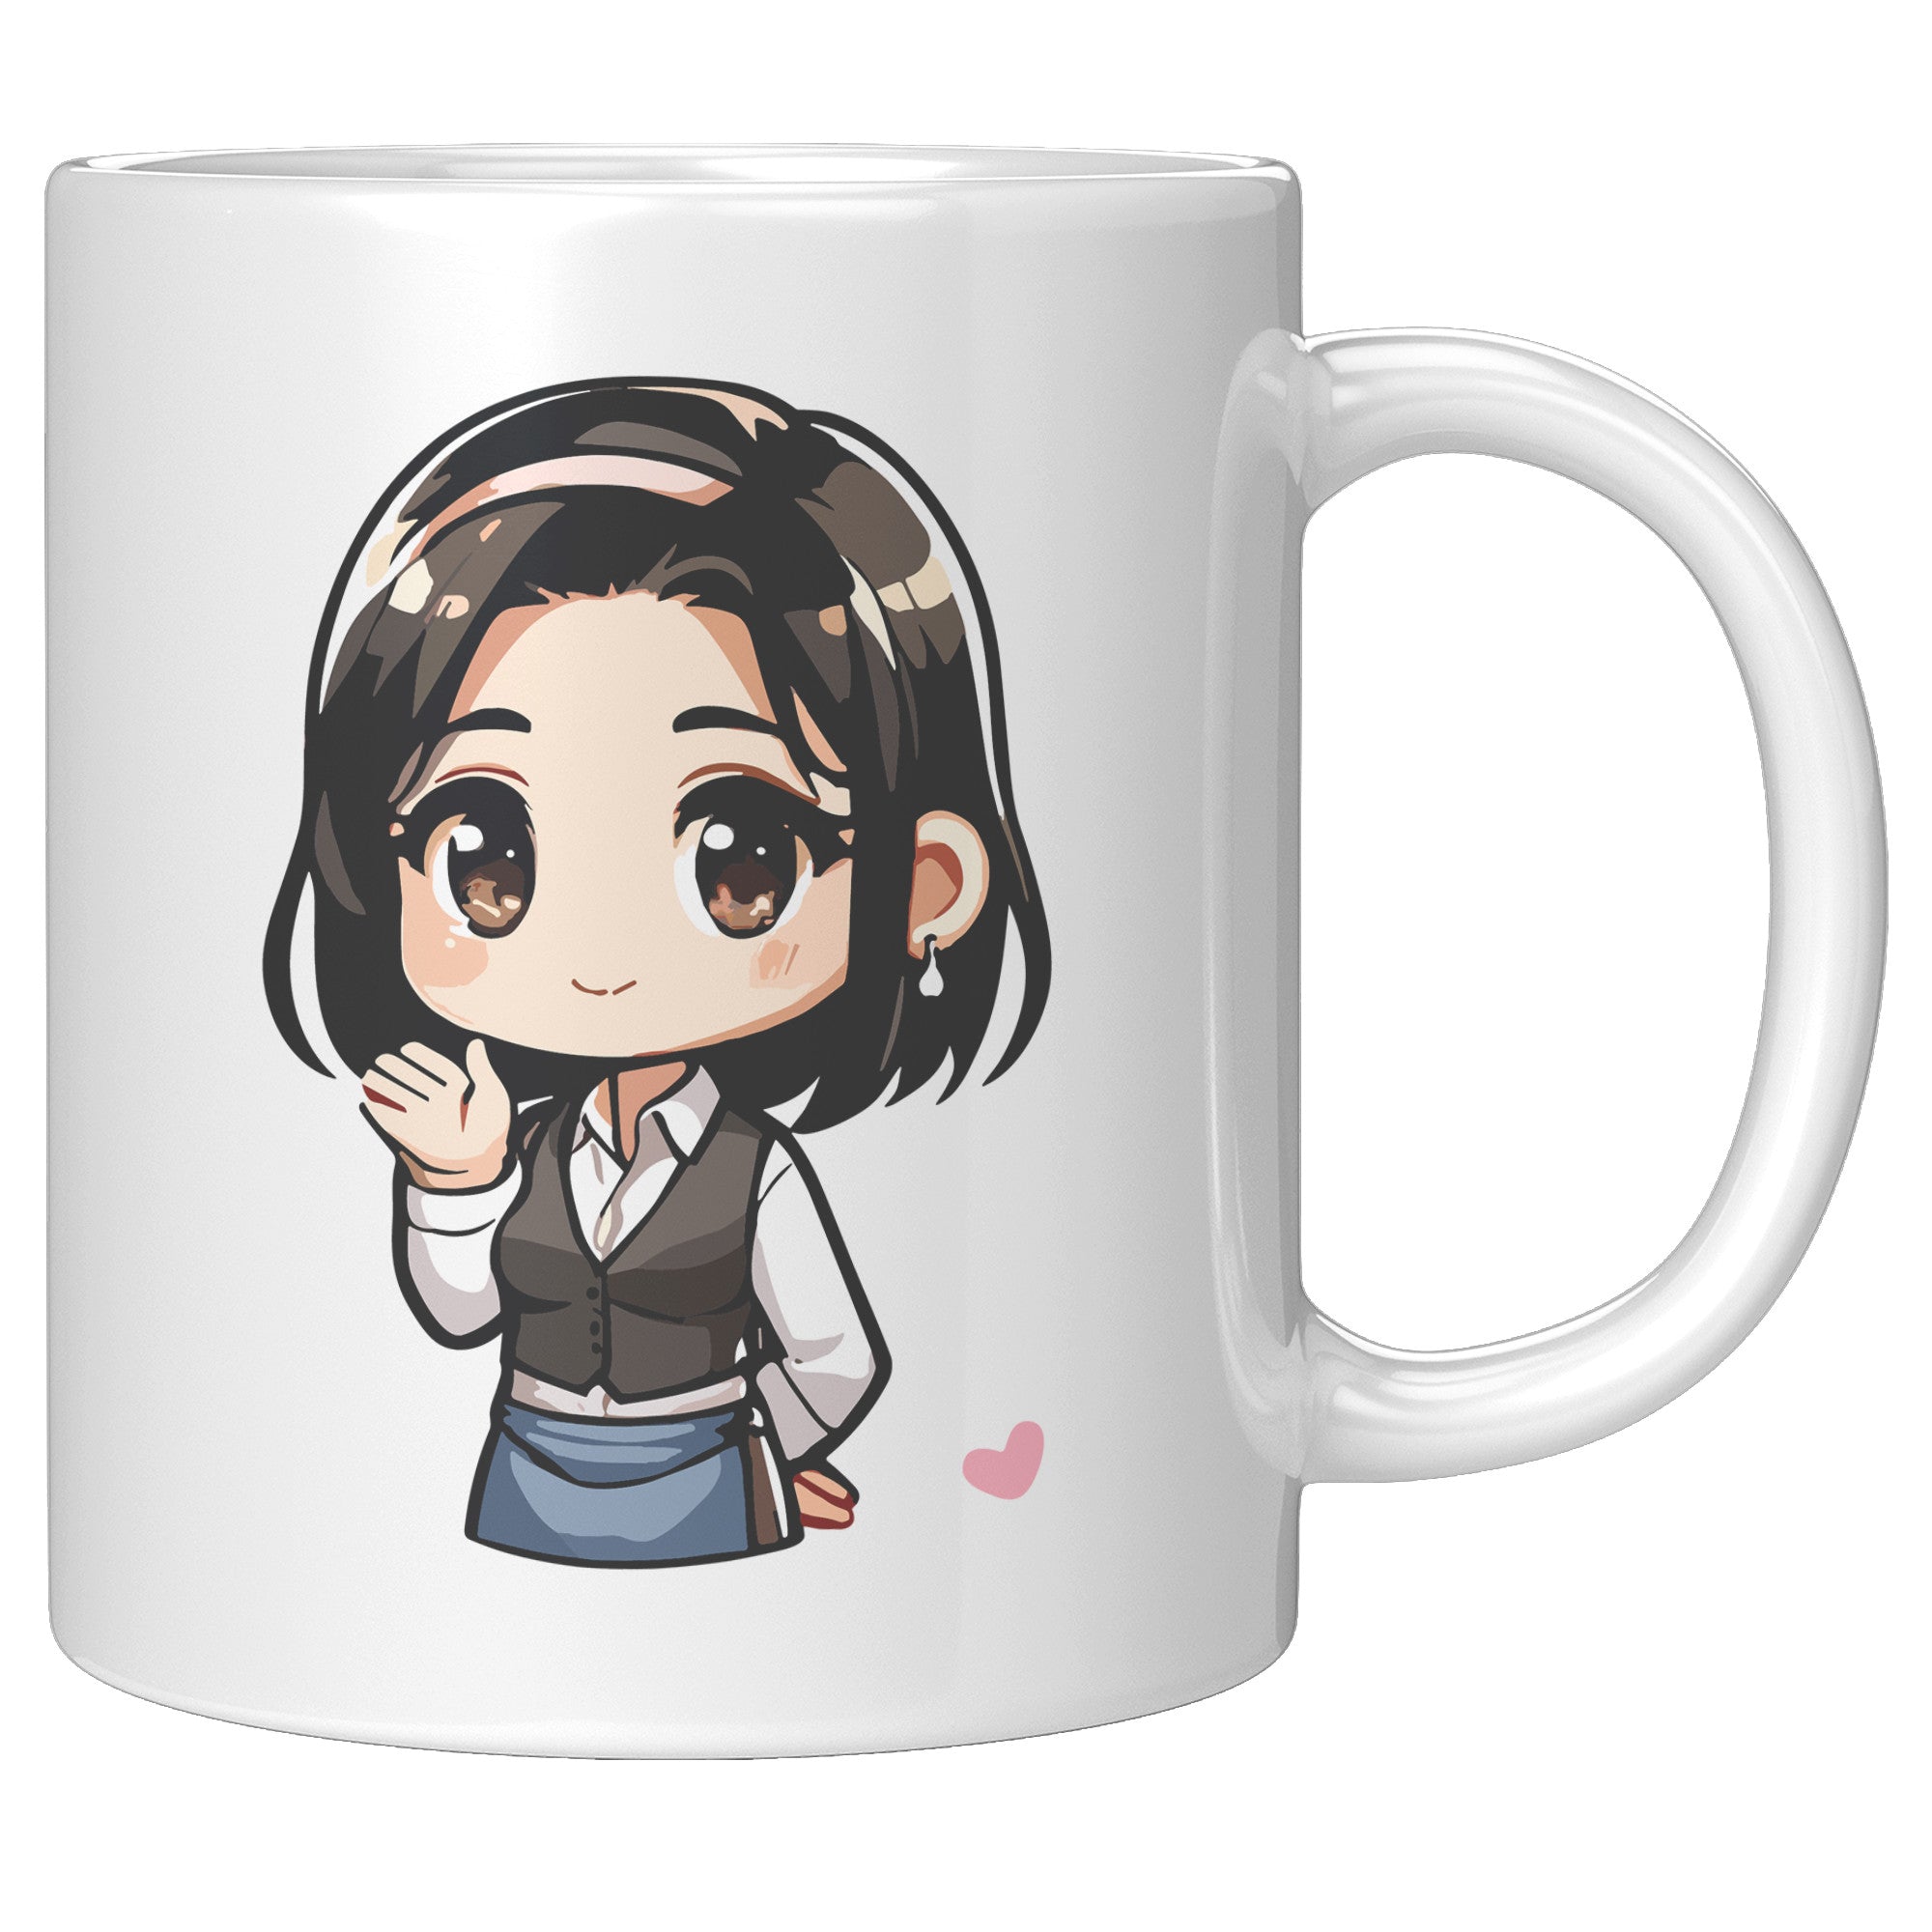 "Marites Gossip Queen Coffee Mug - Cute Cartoon 'Ano Ang Latest?' Cup - Perfect Chismosa Gift - Filipino Slang Tea Mug" - E